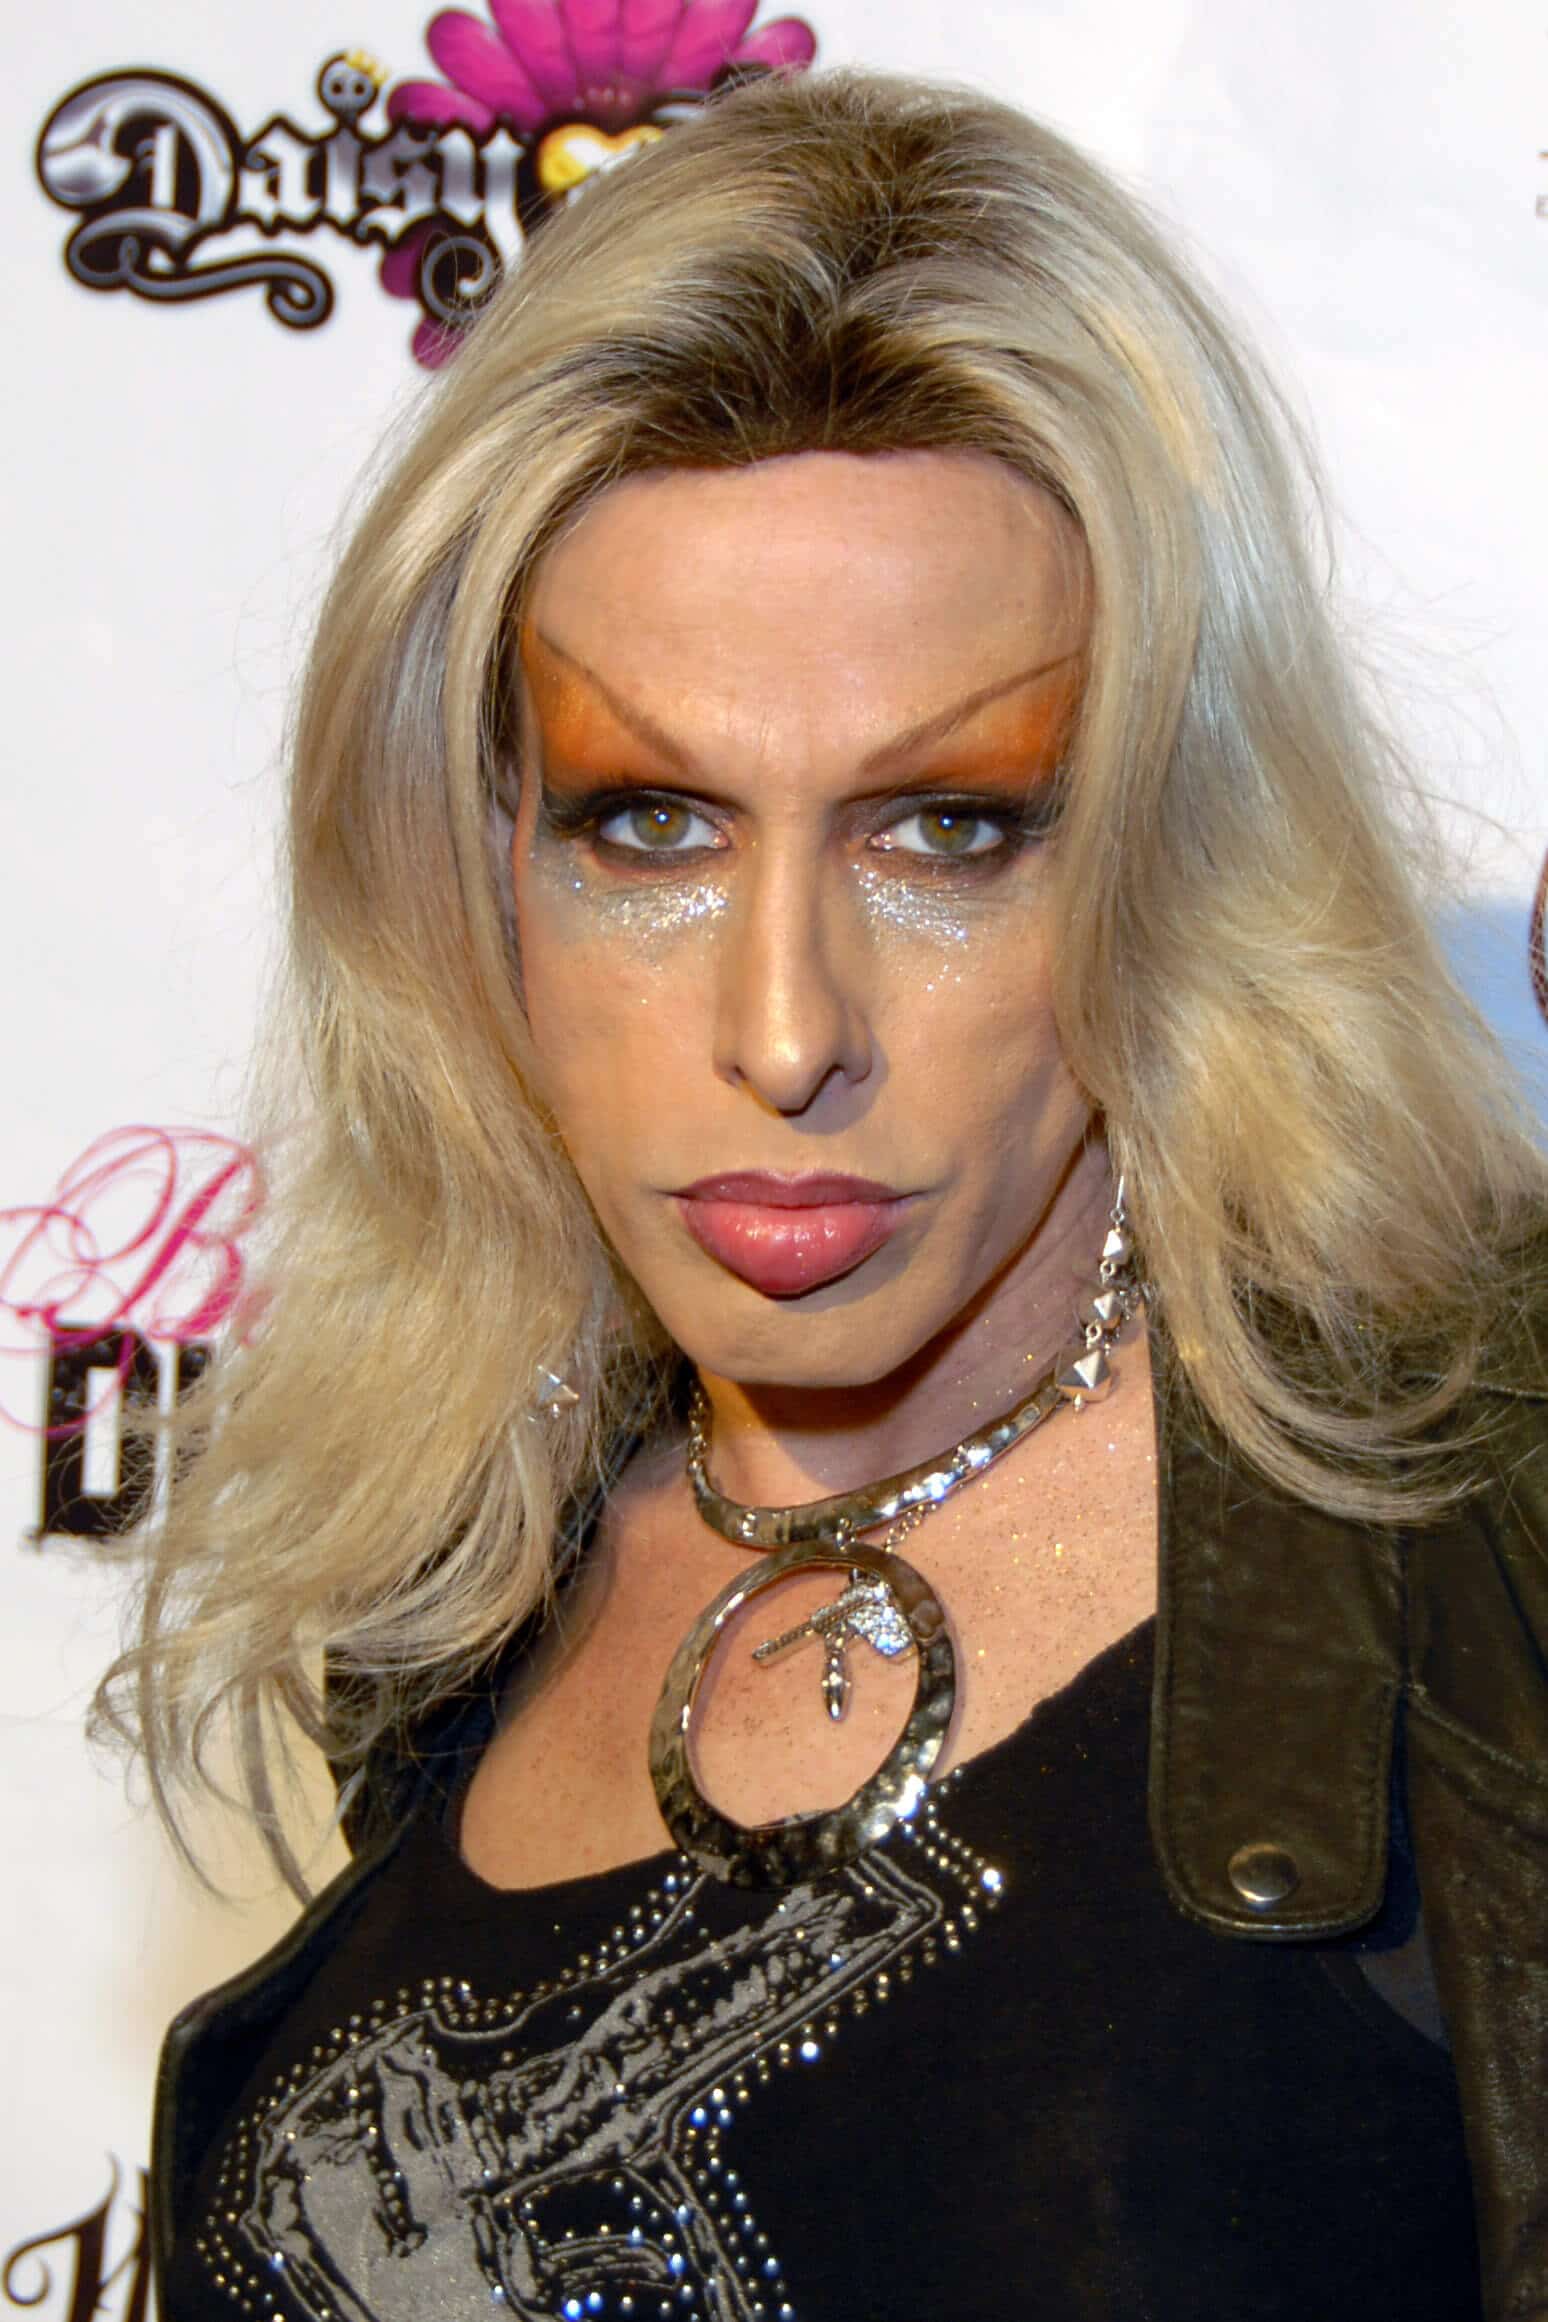 15 Famous Transgender Celebrities You Should Know